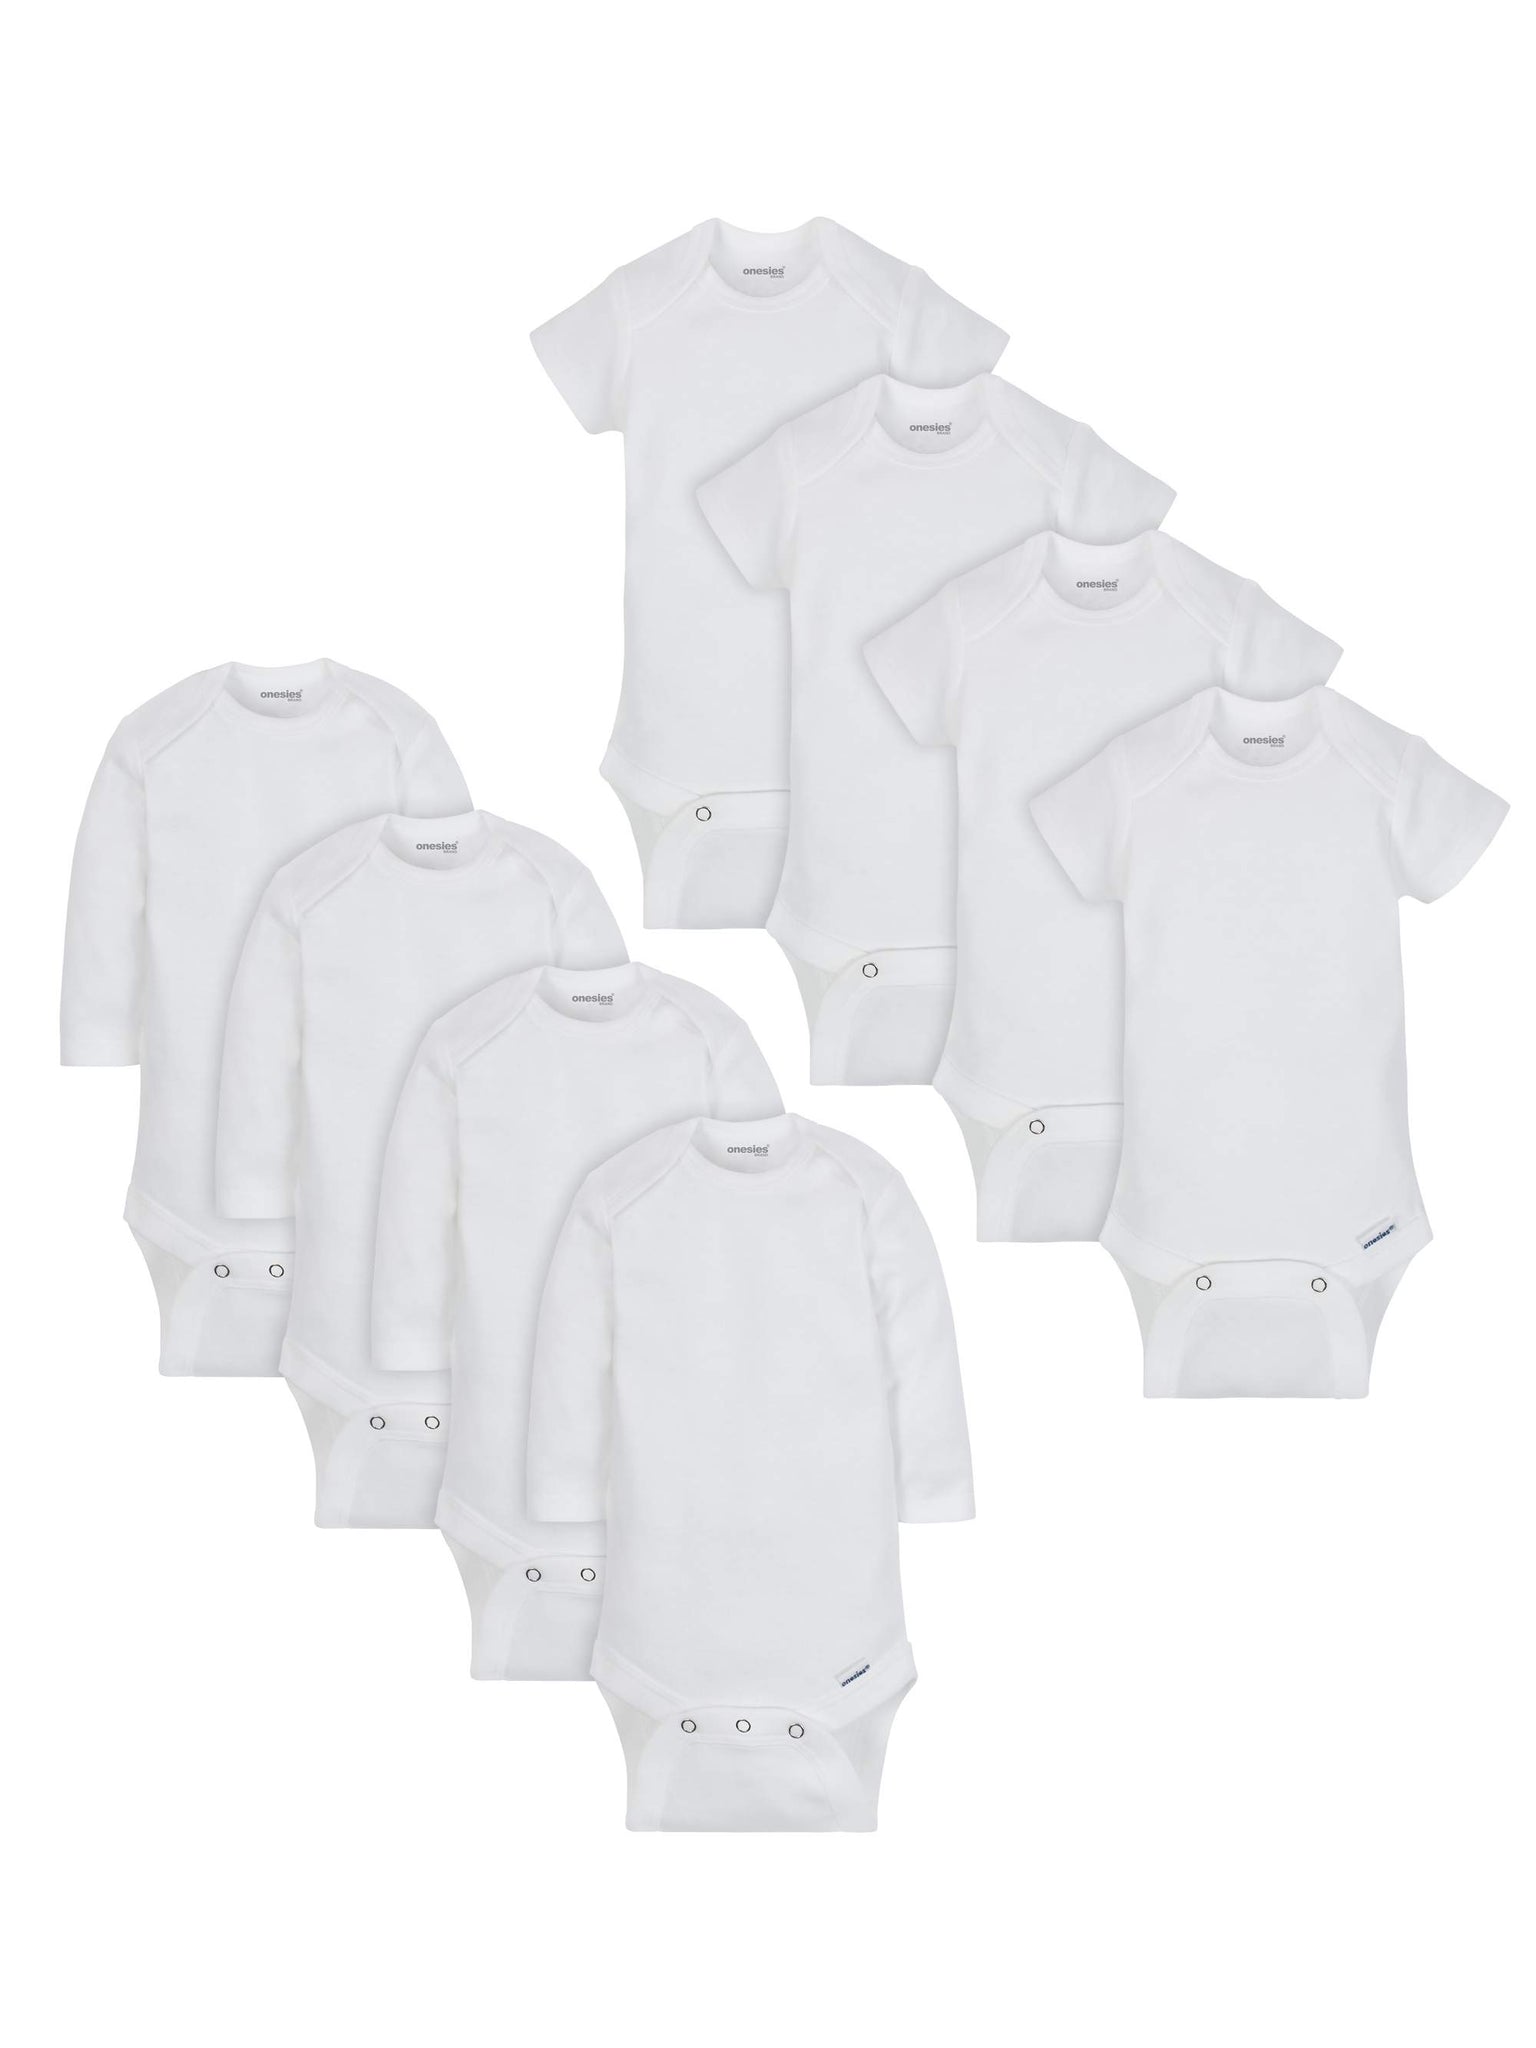 Onesies Brand Baby Boy or Girl Gender Neutral White Bodysuits Variety Short Sleeve & Long Sleeve, 8-Pack